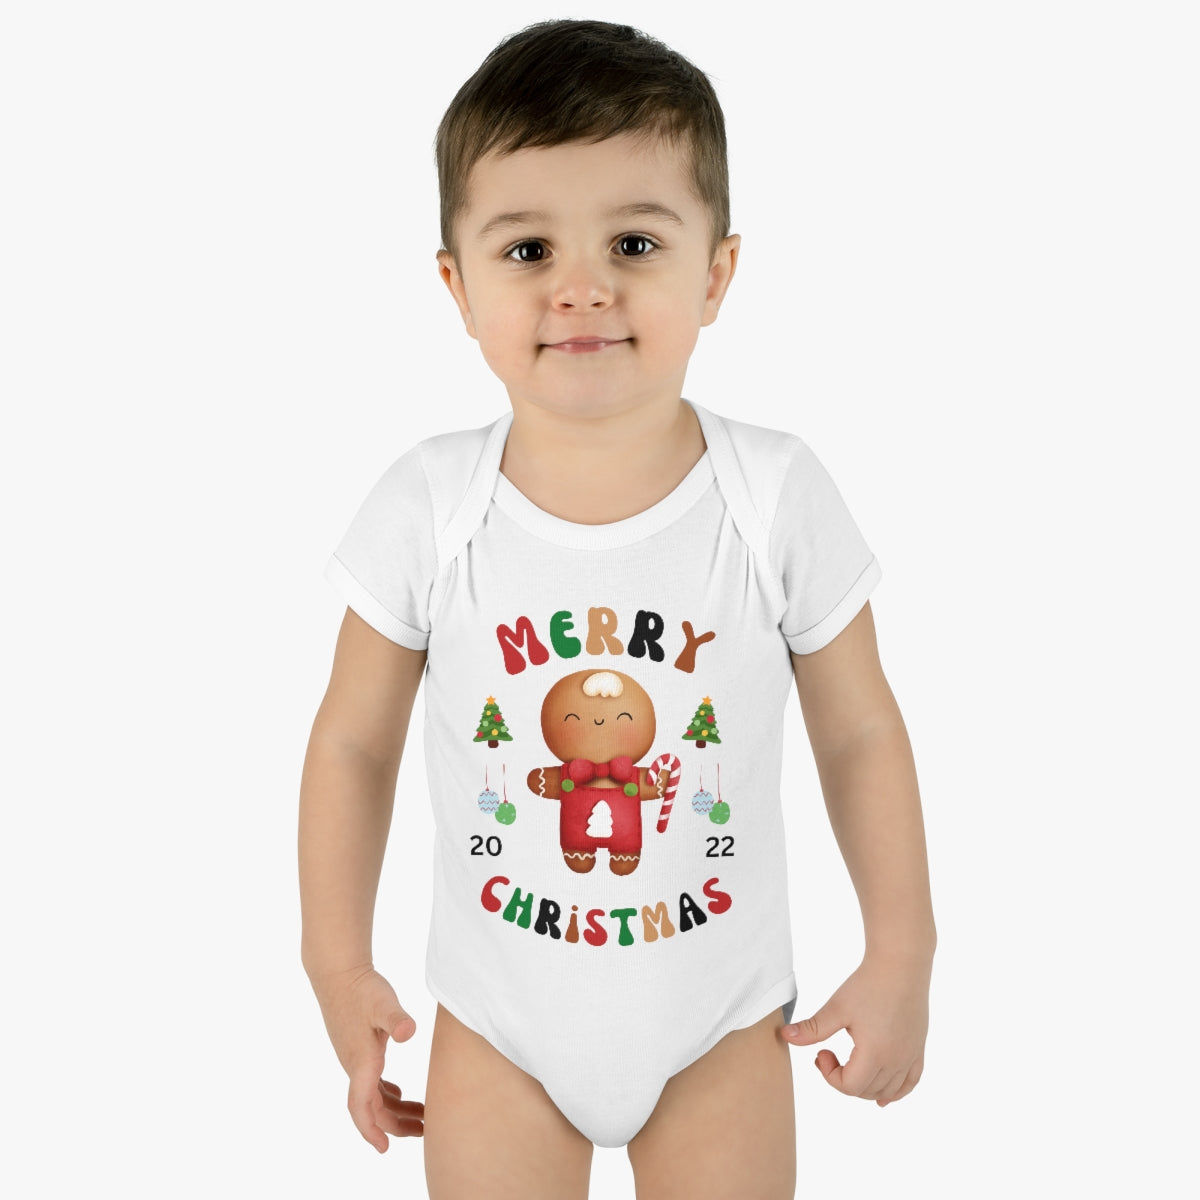 Merry Christmas Baby Bodysuit, Christmas Baby Bodysuit, Cute Christmas Baby Bodysuit,